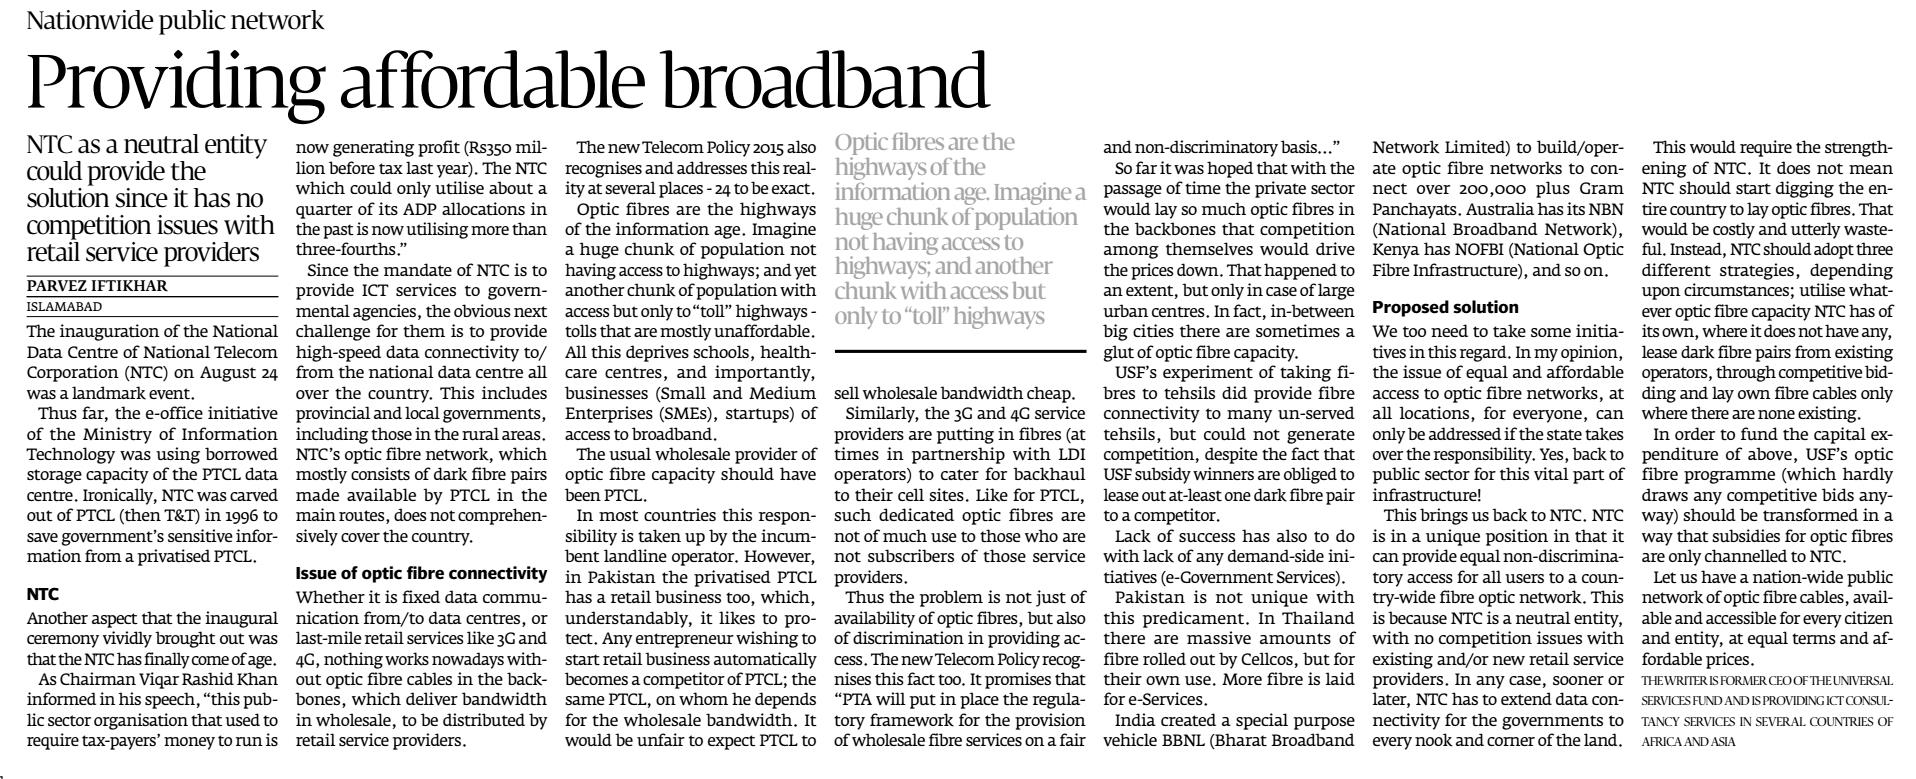 Nationwide public network providing affordable broadband 29Aug16